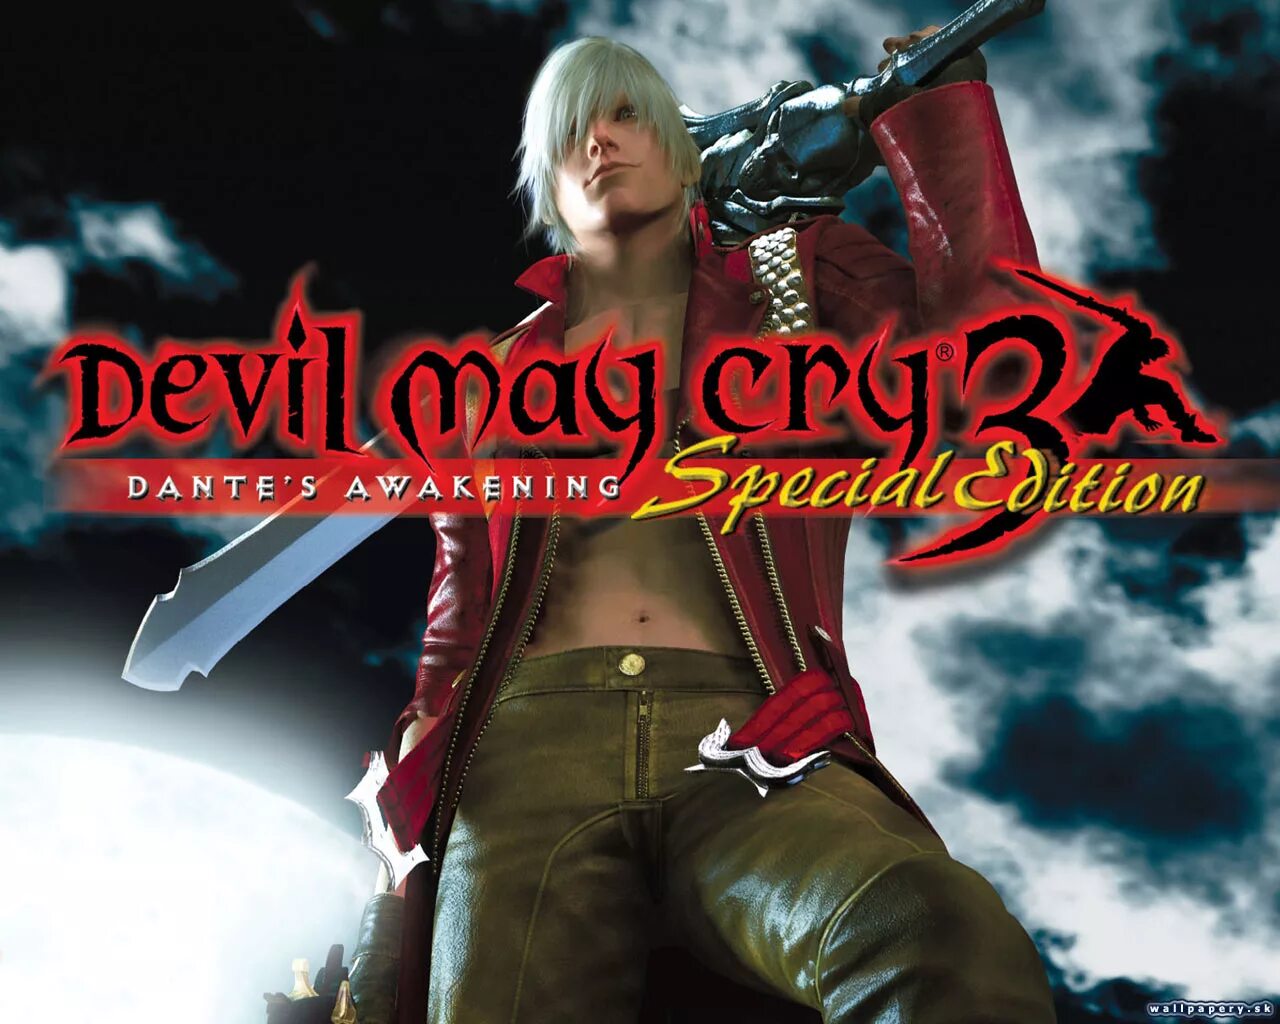 Devil May Cry 3: Dante's Awakening Special Edition. Devil May Cry 3 Special Edition. DMC 3 Special Edition. Devil May Cry 3 Dante s. Dmc 3 special